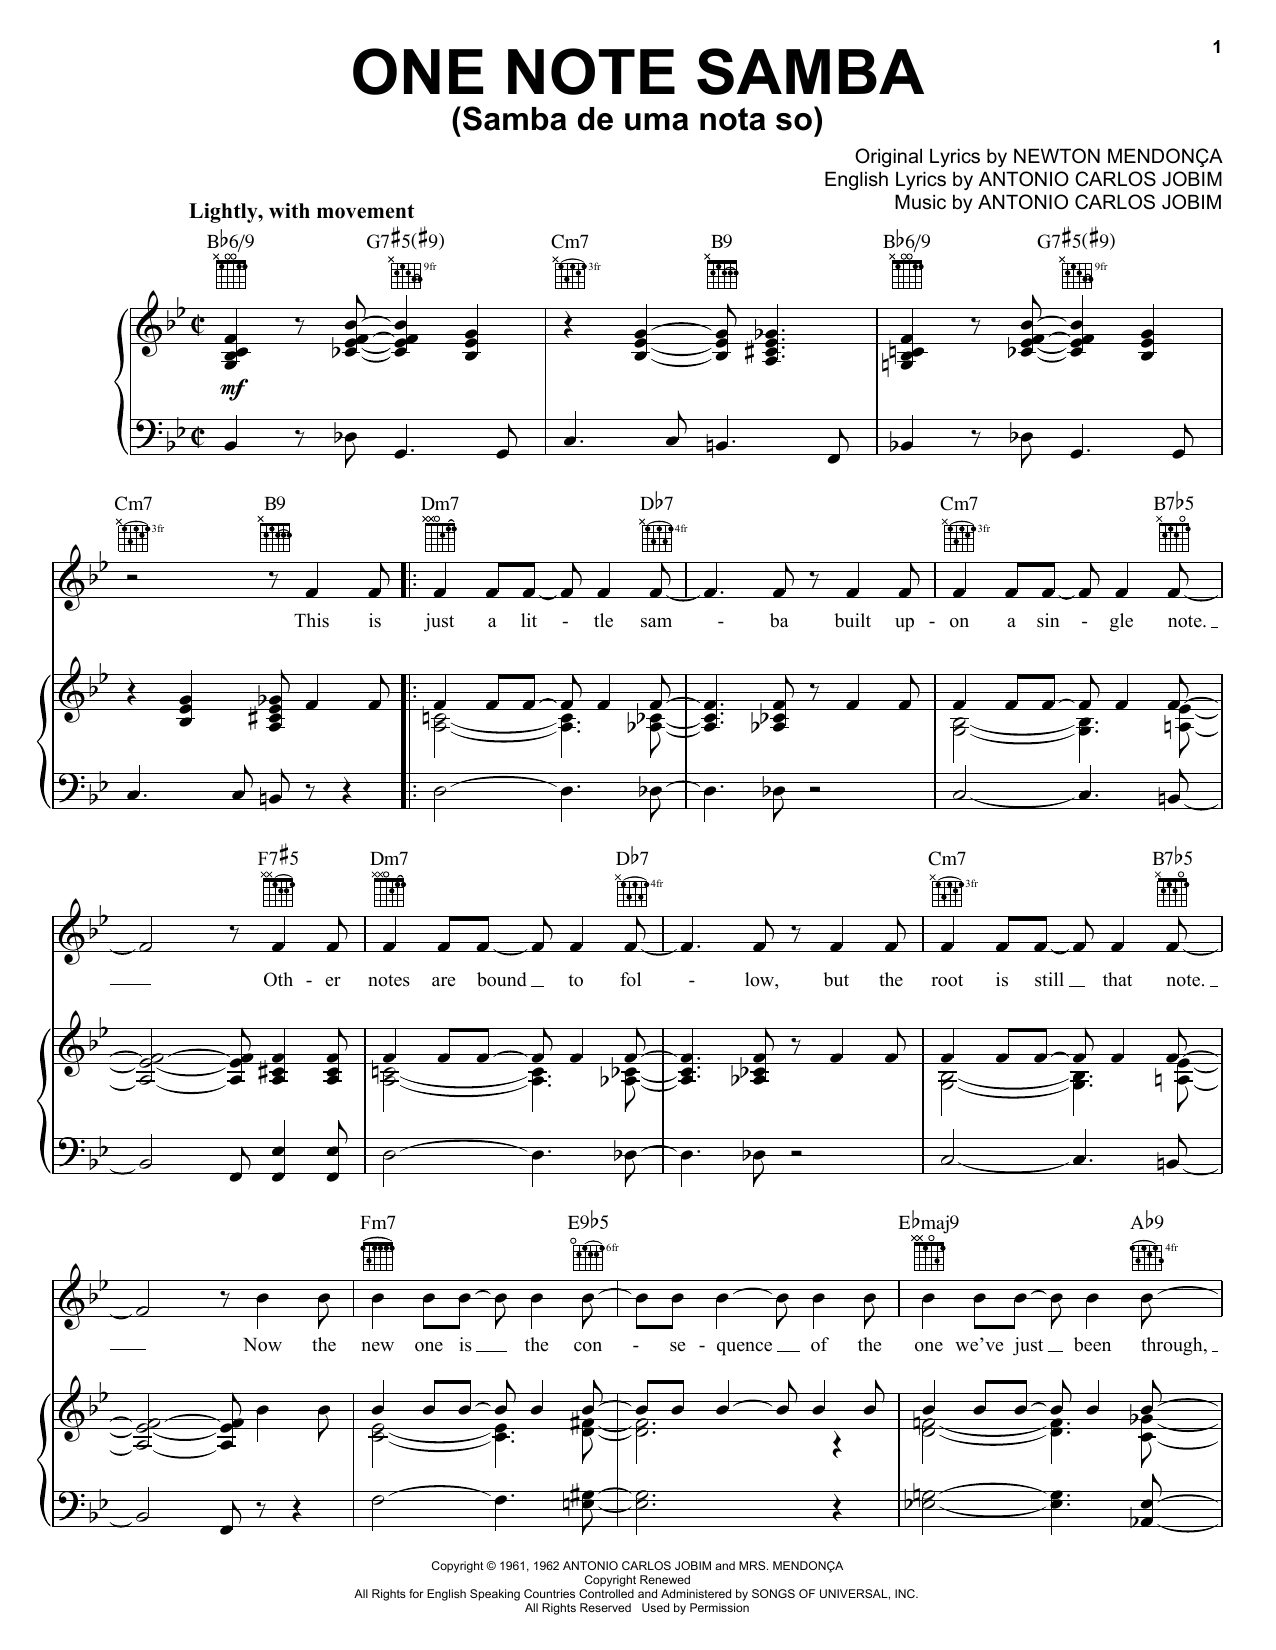 Download Antonio Carlos Jobim One Note Samba (Samba De Uma Nota So) Sheet Music and learn how to play Flute PDF digital score in minutes